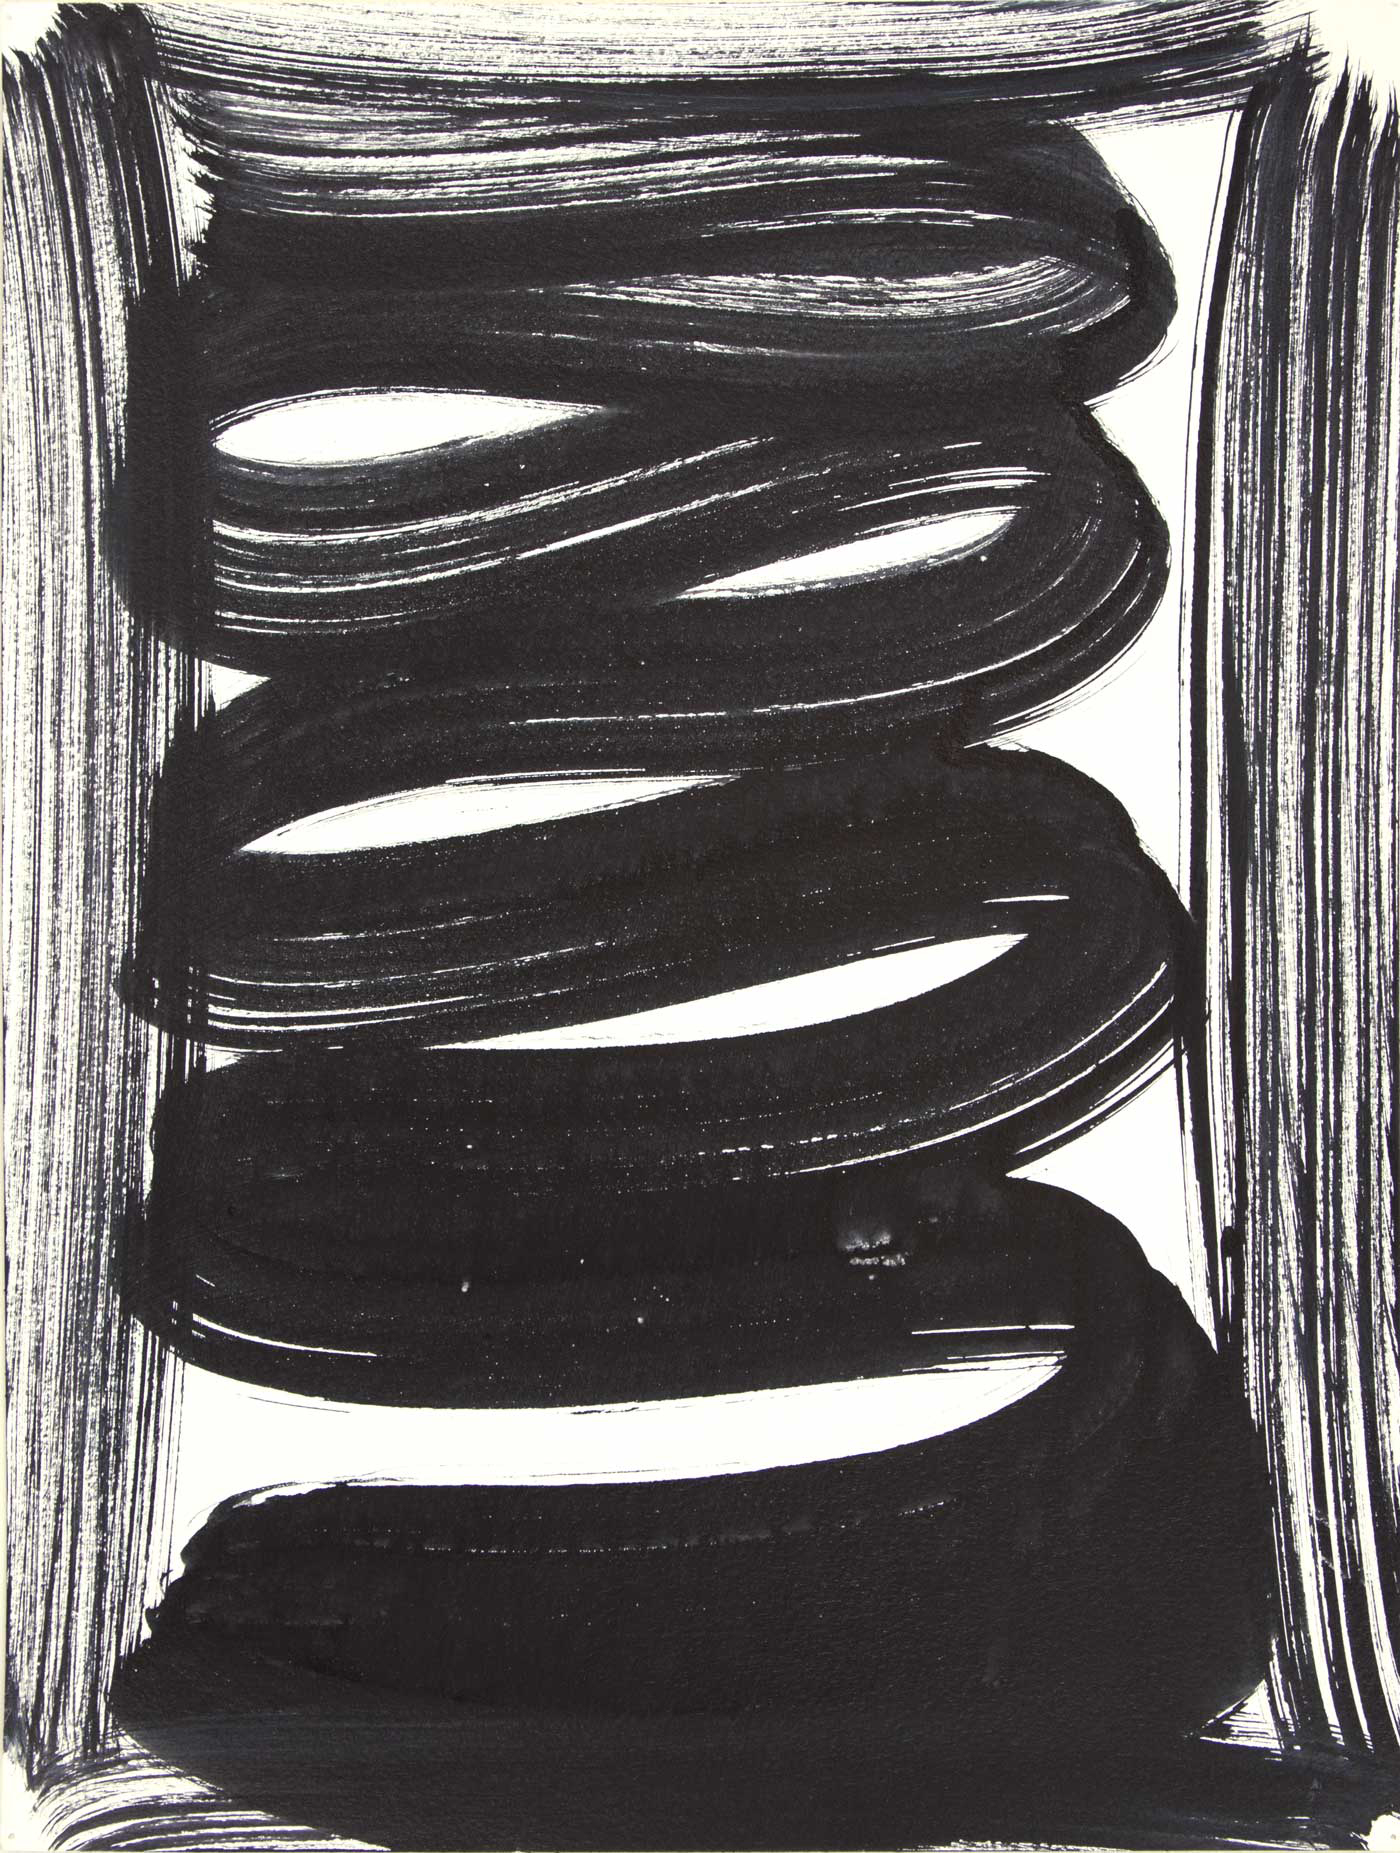   Vault 6 , 2015 Sumi ink on paper 16 x 12 in. 